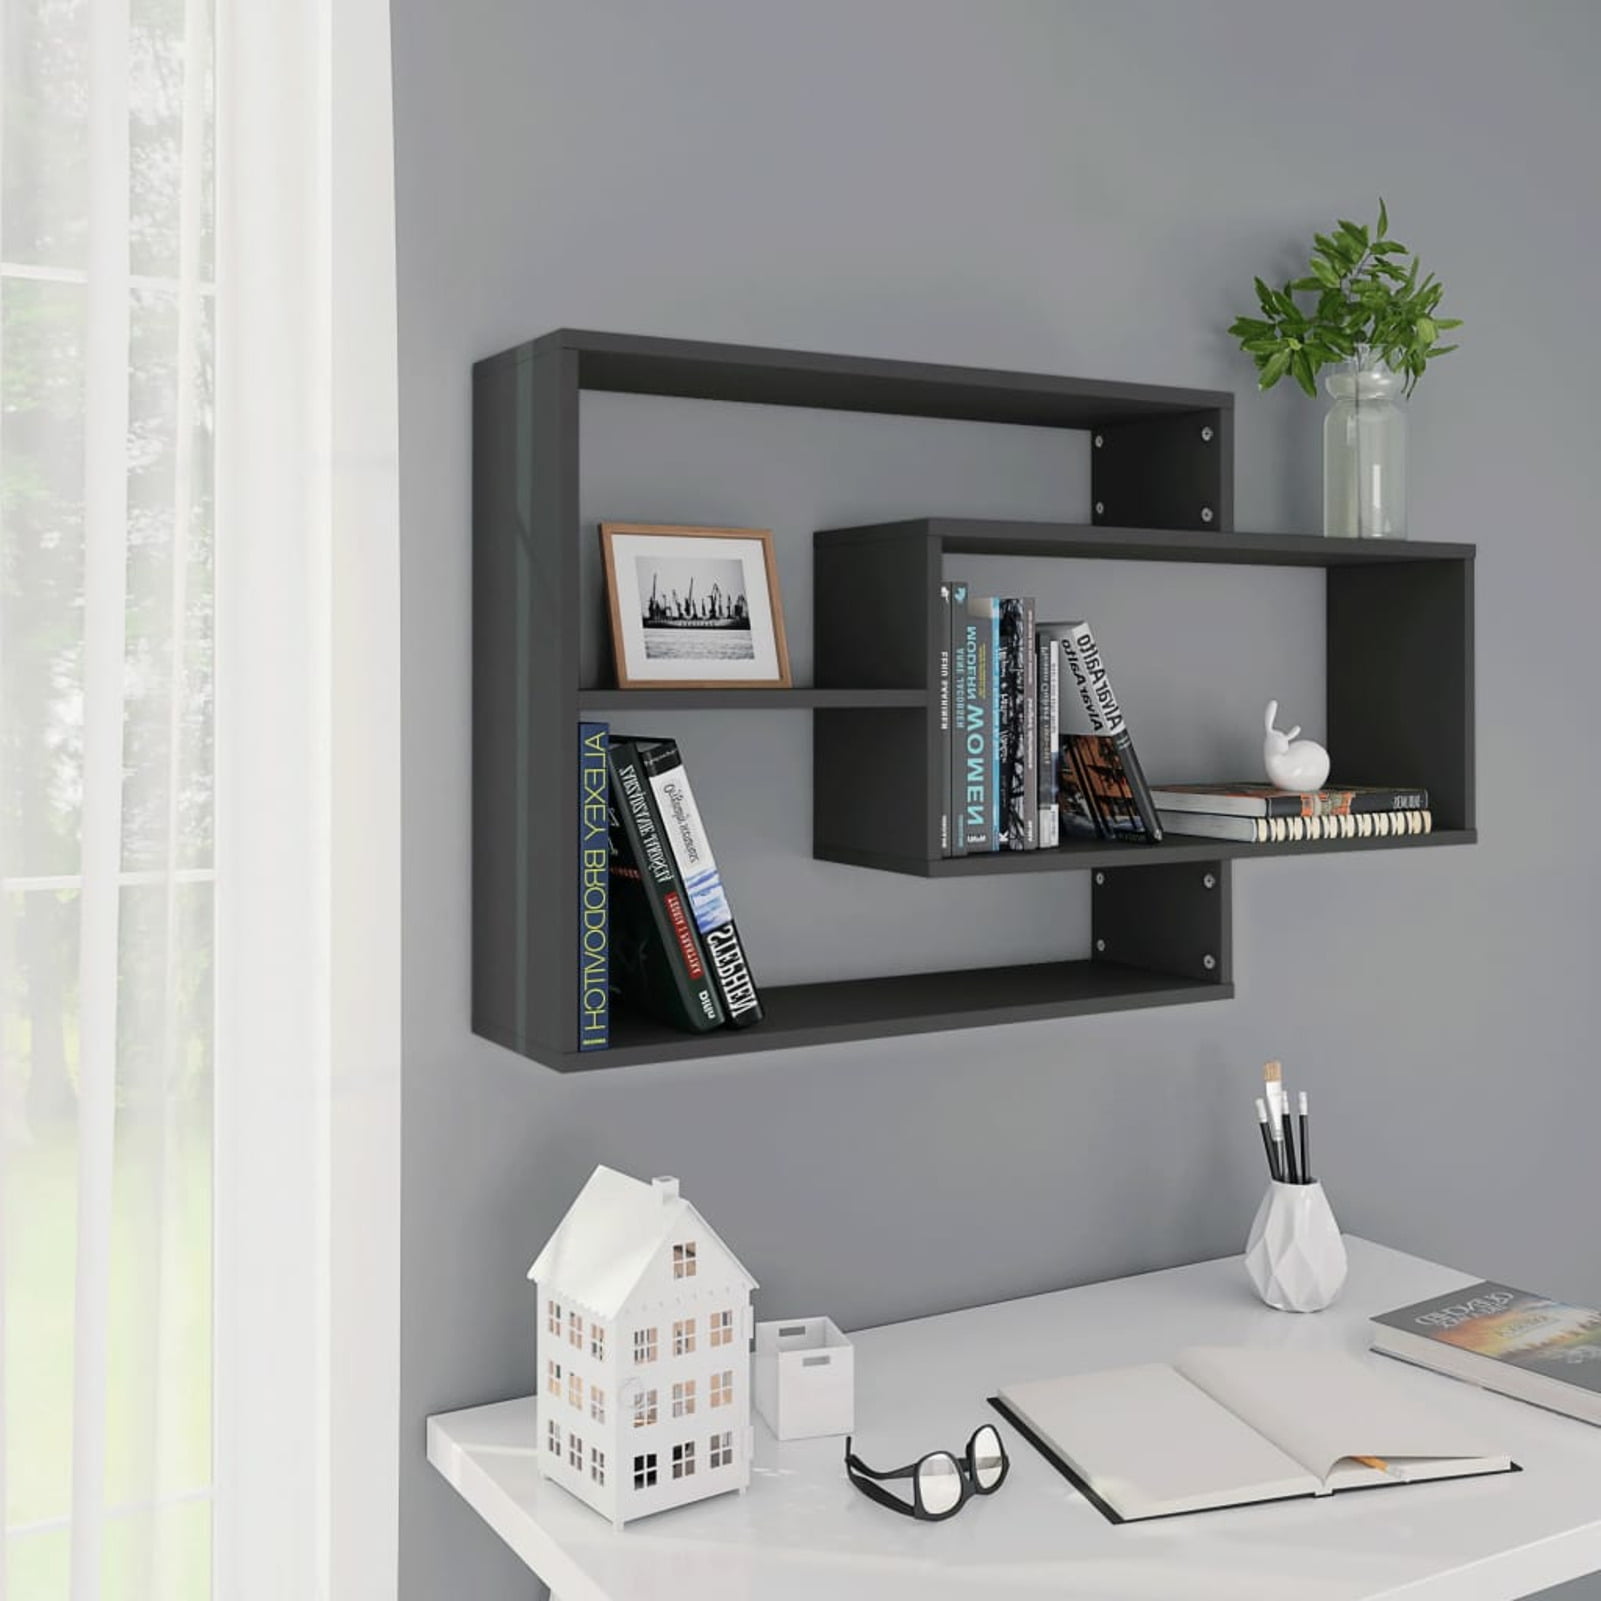 Details about   vidaXL 5 Tier Book Shelf Rack Storage Organizer CD Cabinet Bookcase Display Wood 